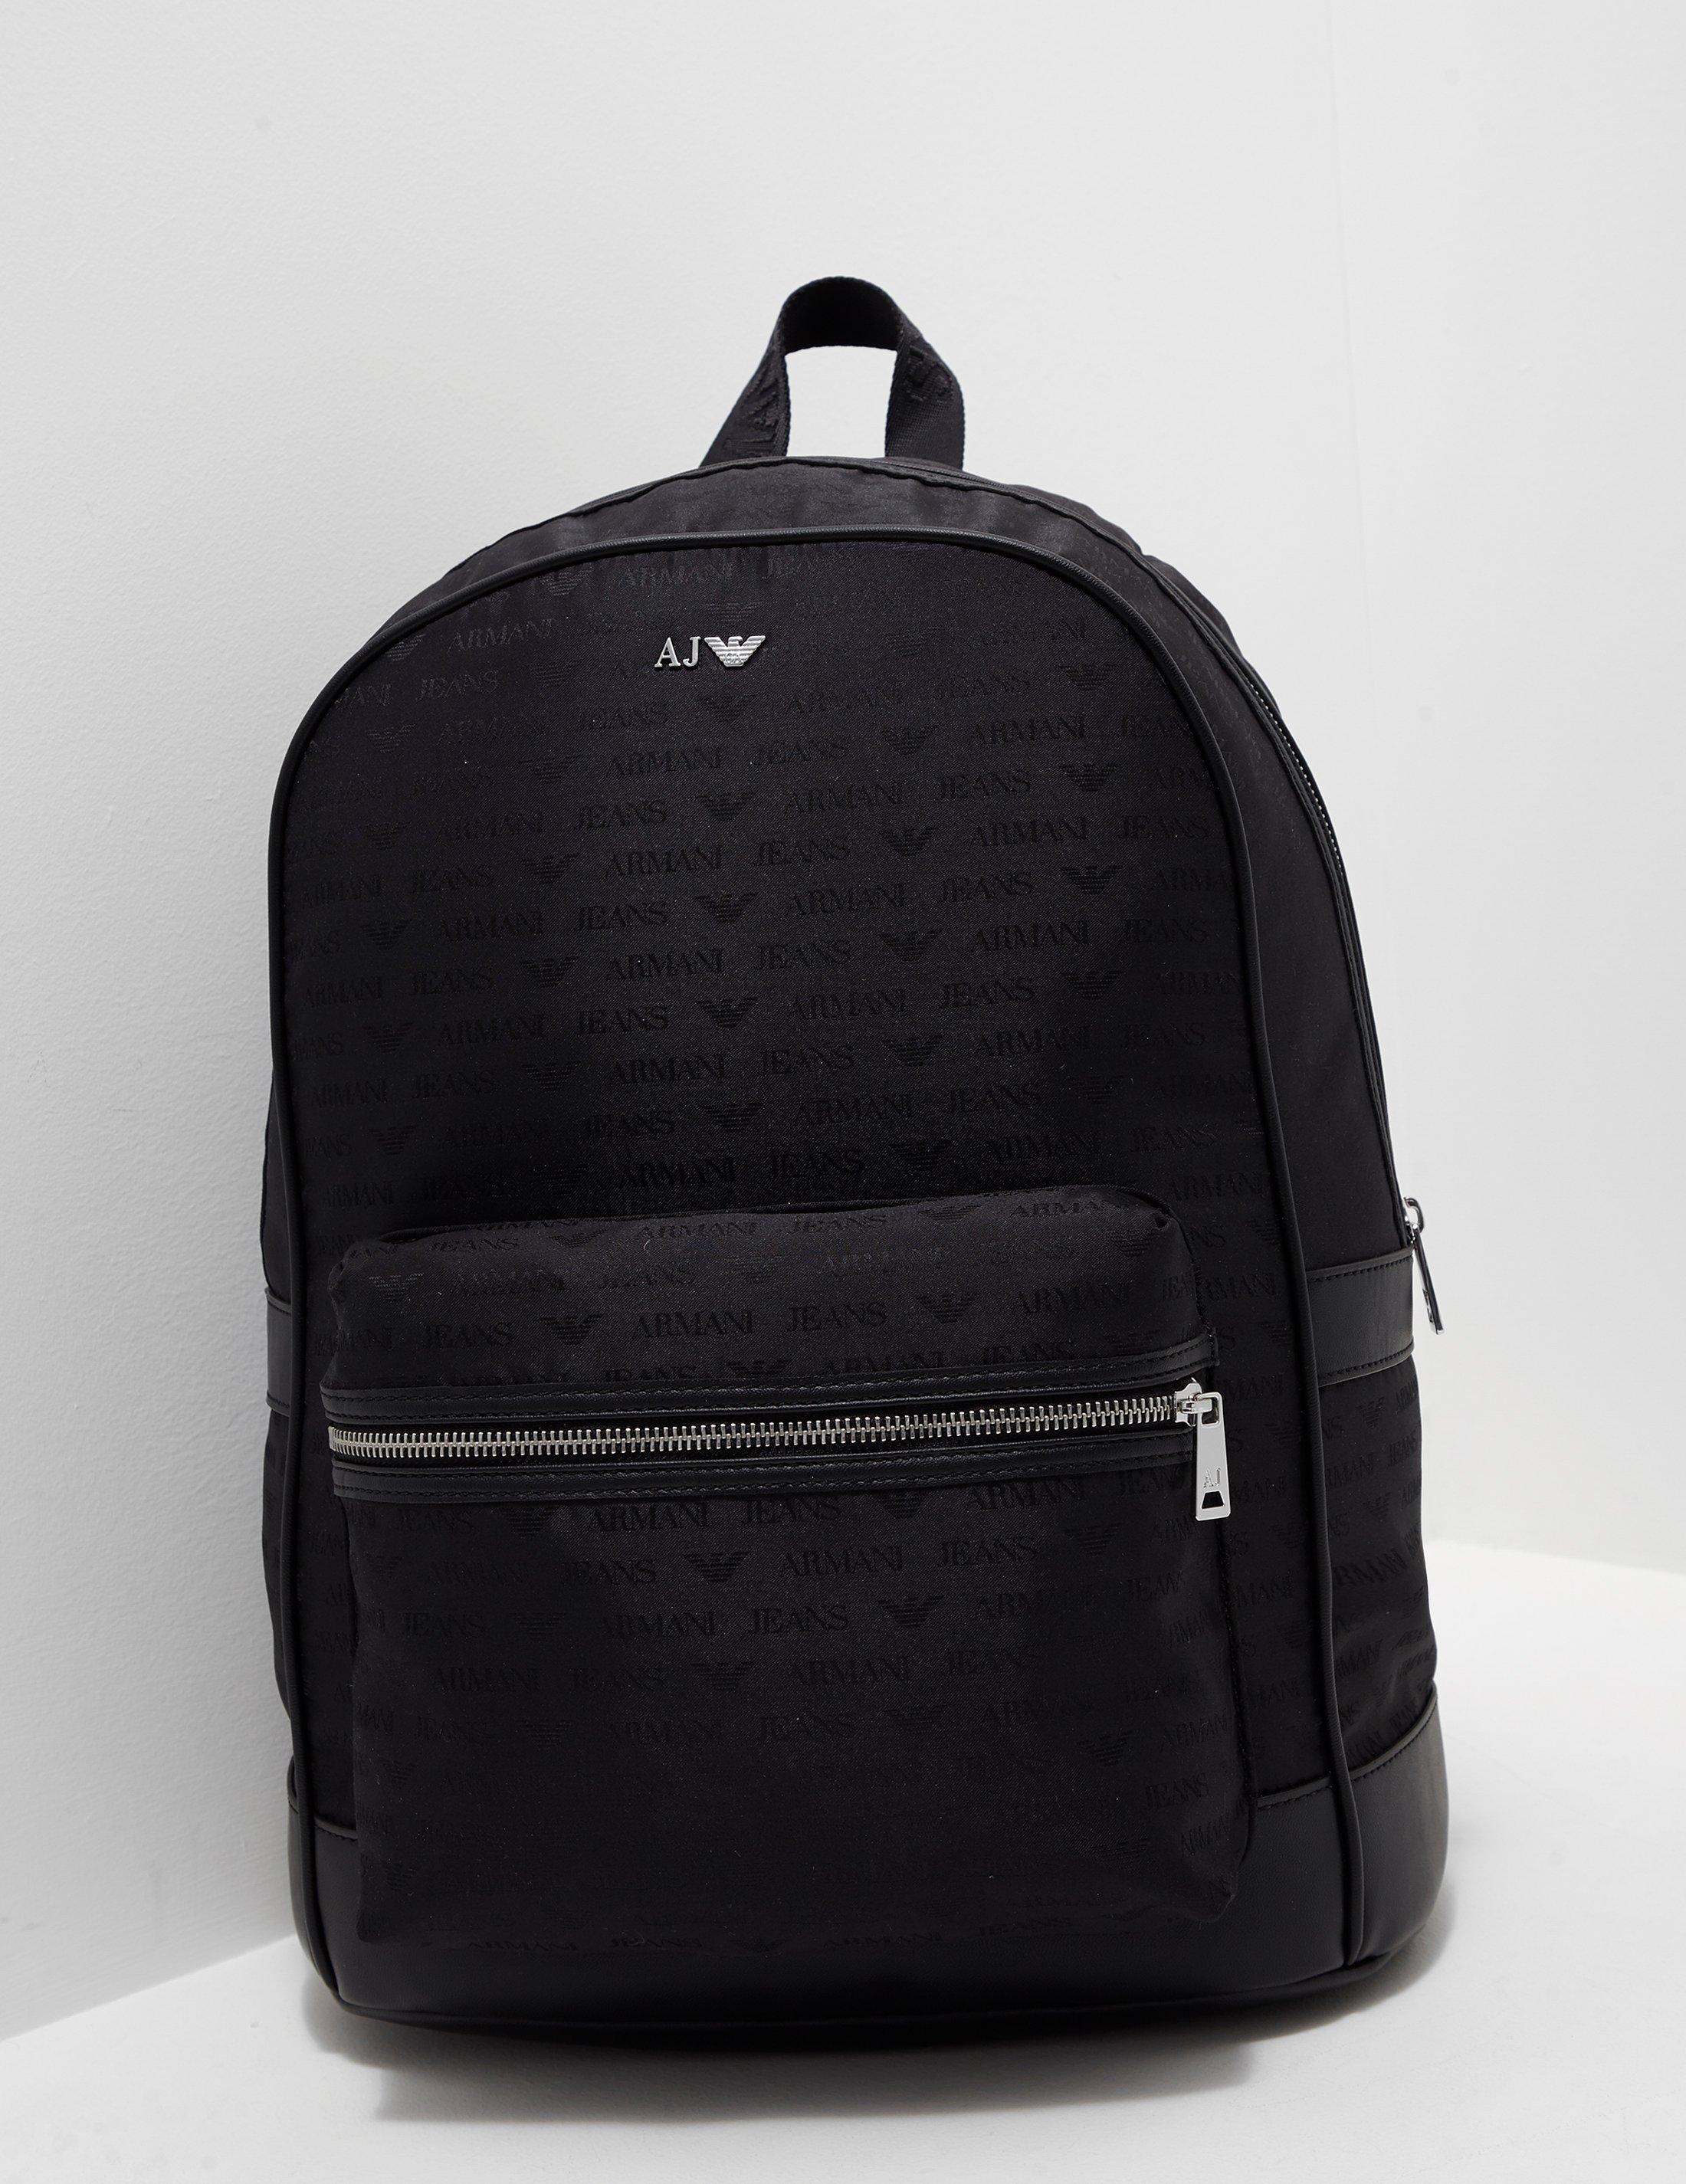 Armani Jeans Synthetic Mens Nylon Backpack Black, Black for Men - Lyst